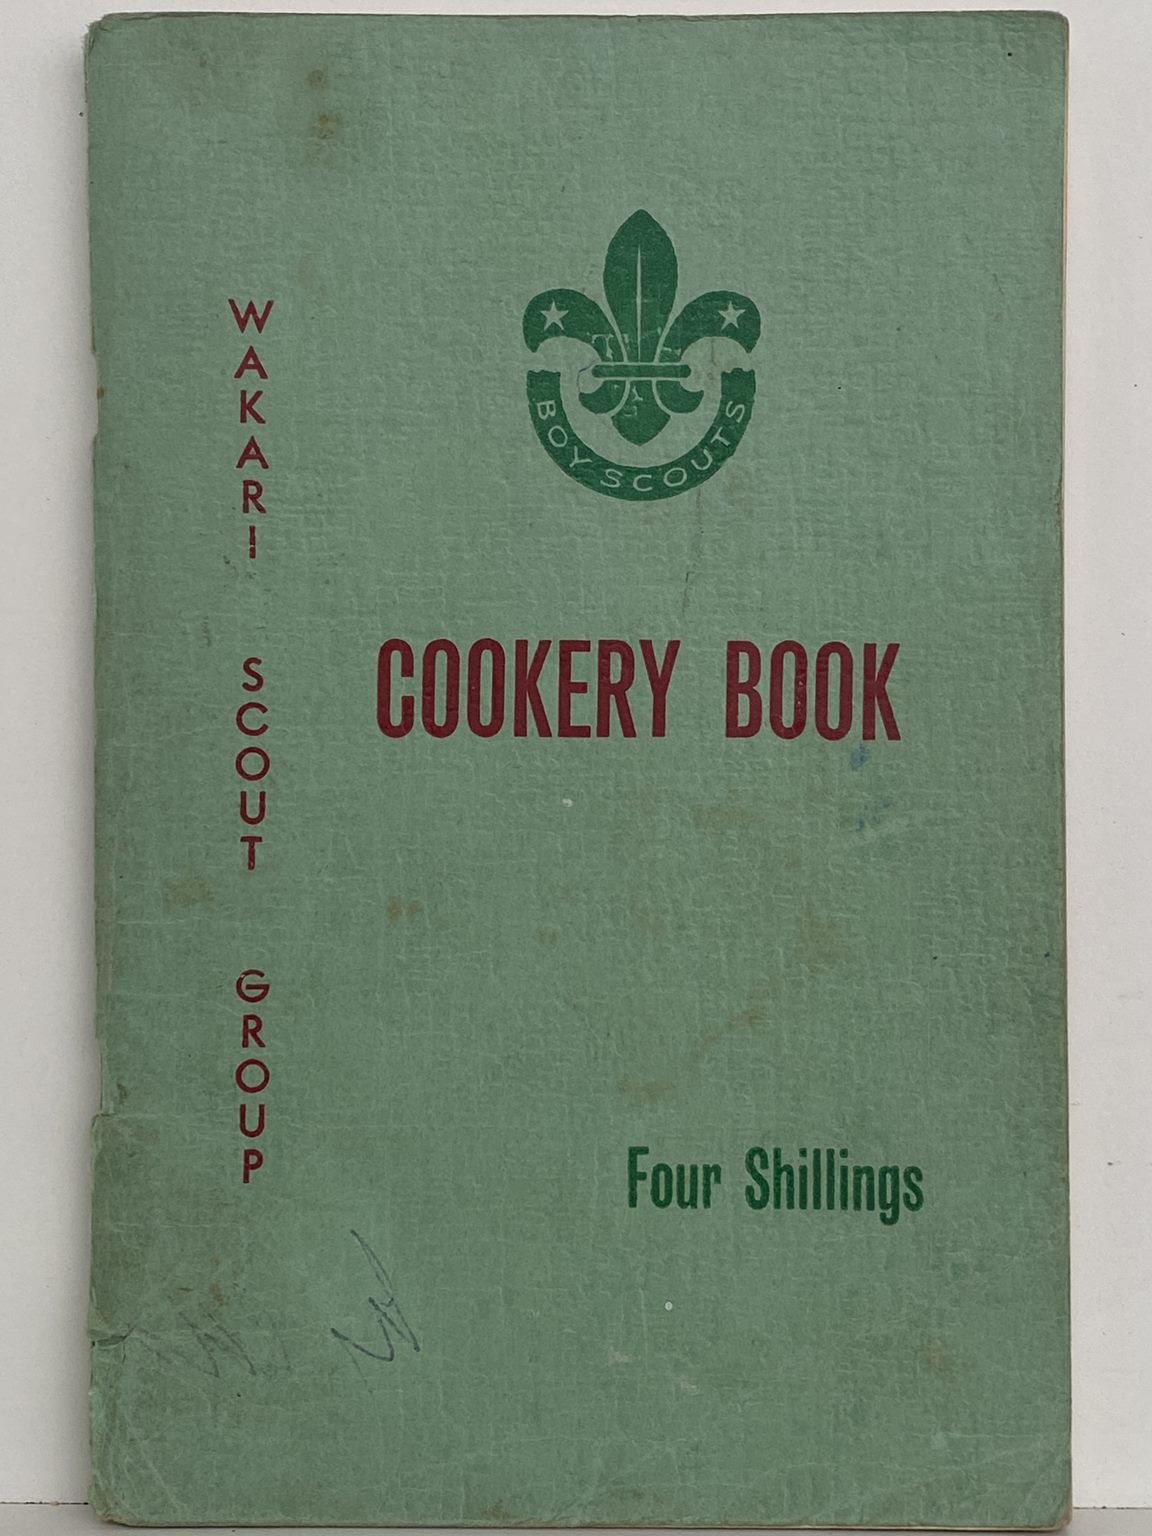 VINTAGE COOK BOOK: Waikari Scout Group